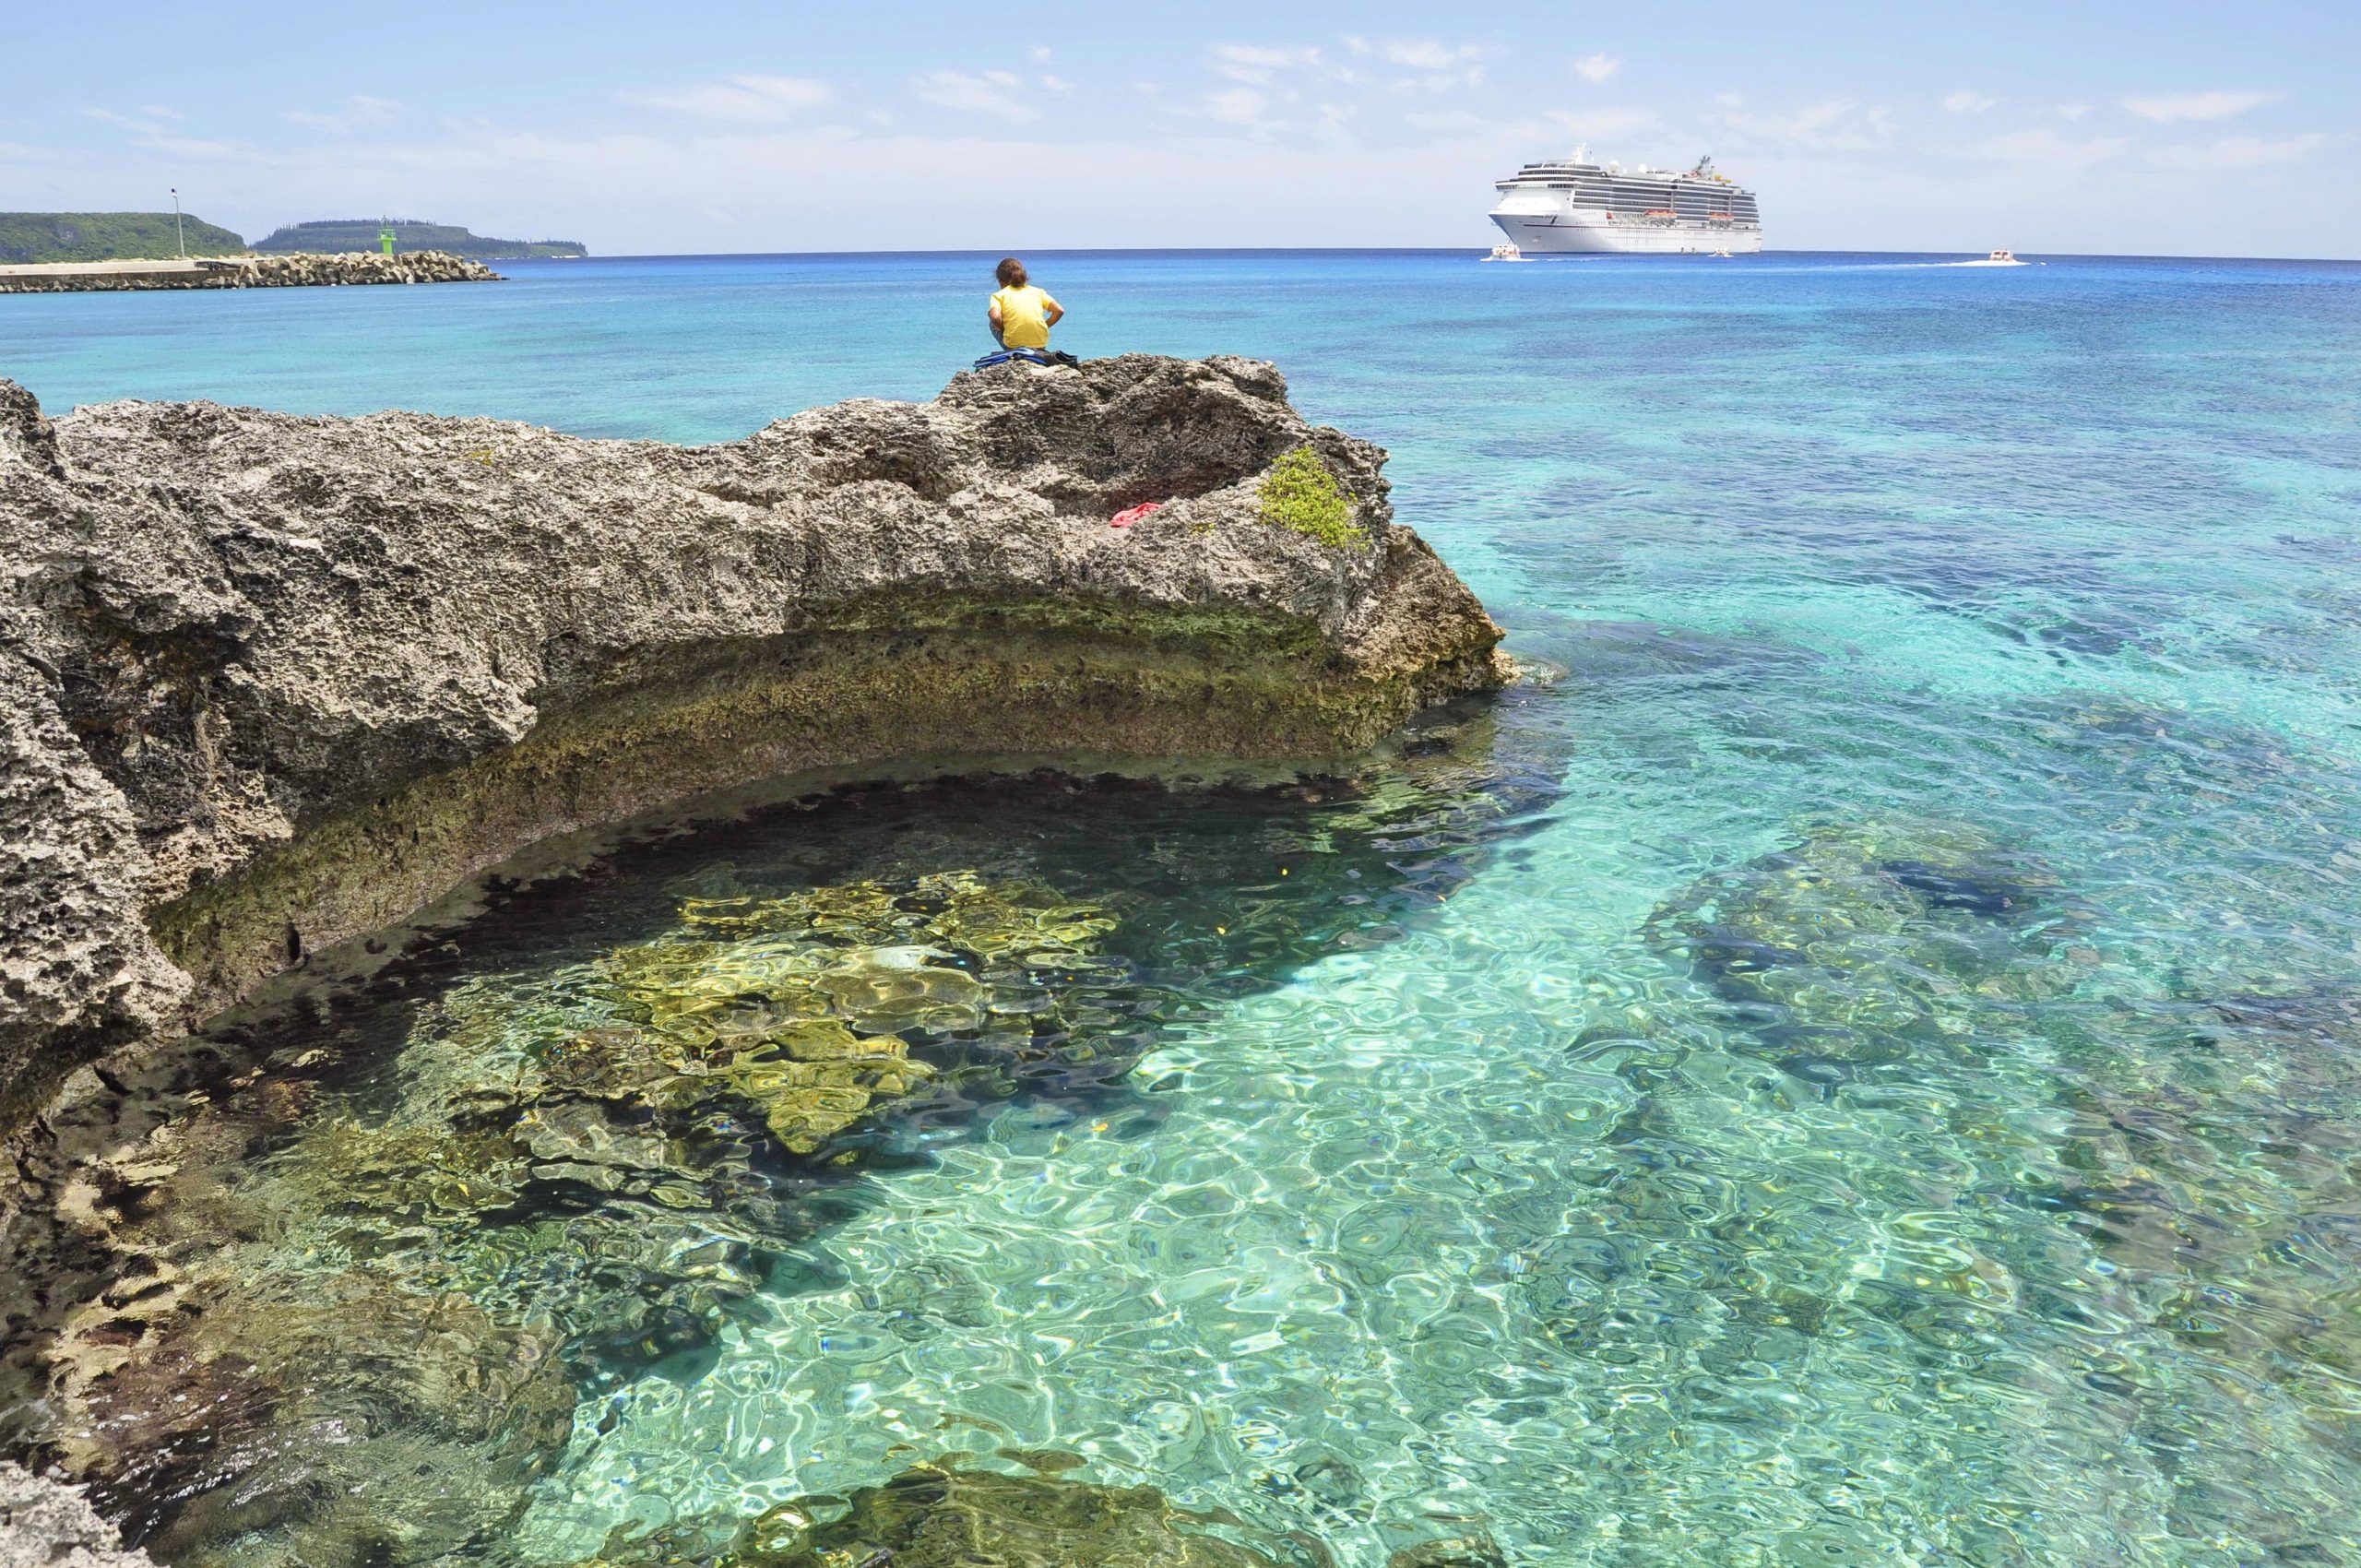 South Pacific islands turns cruise ships away due to coronavirus fears